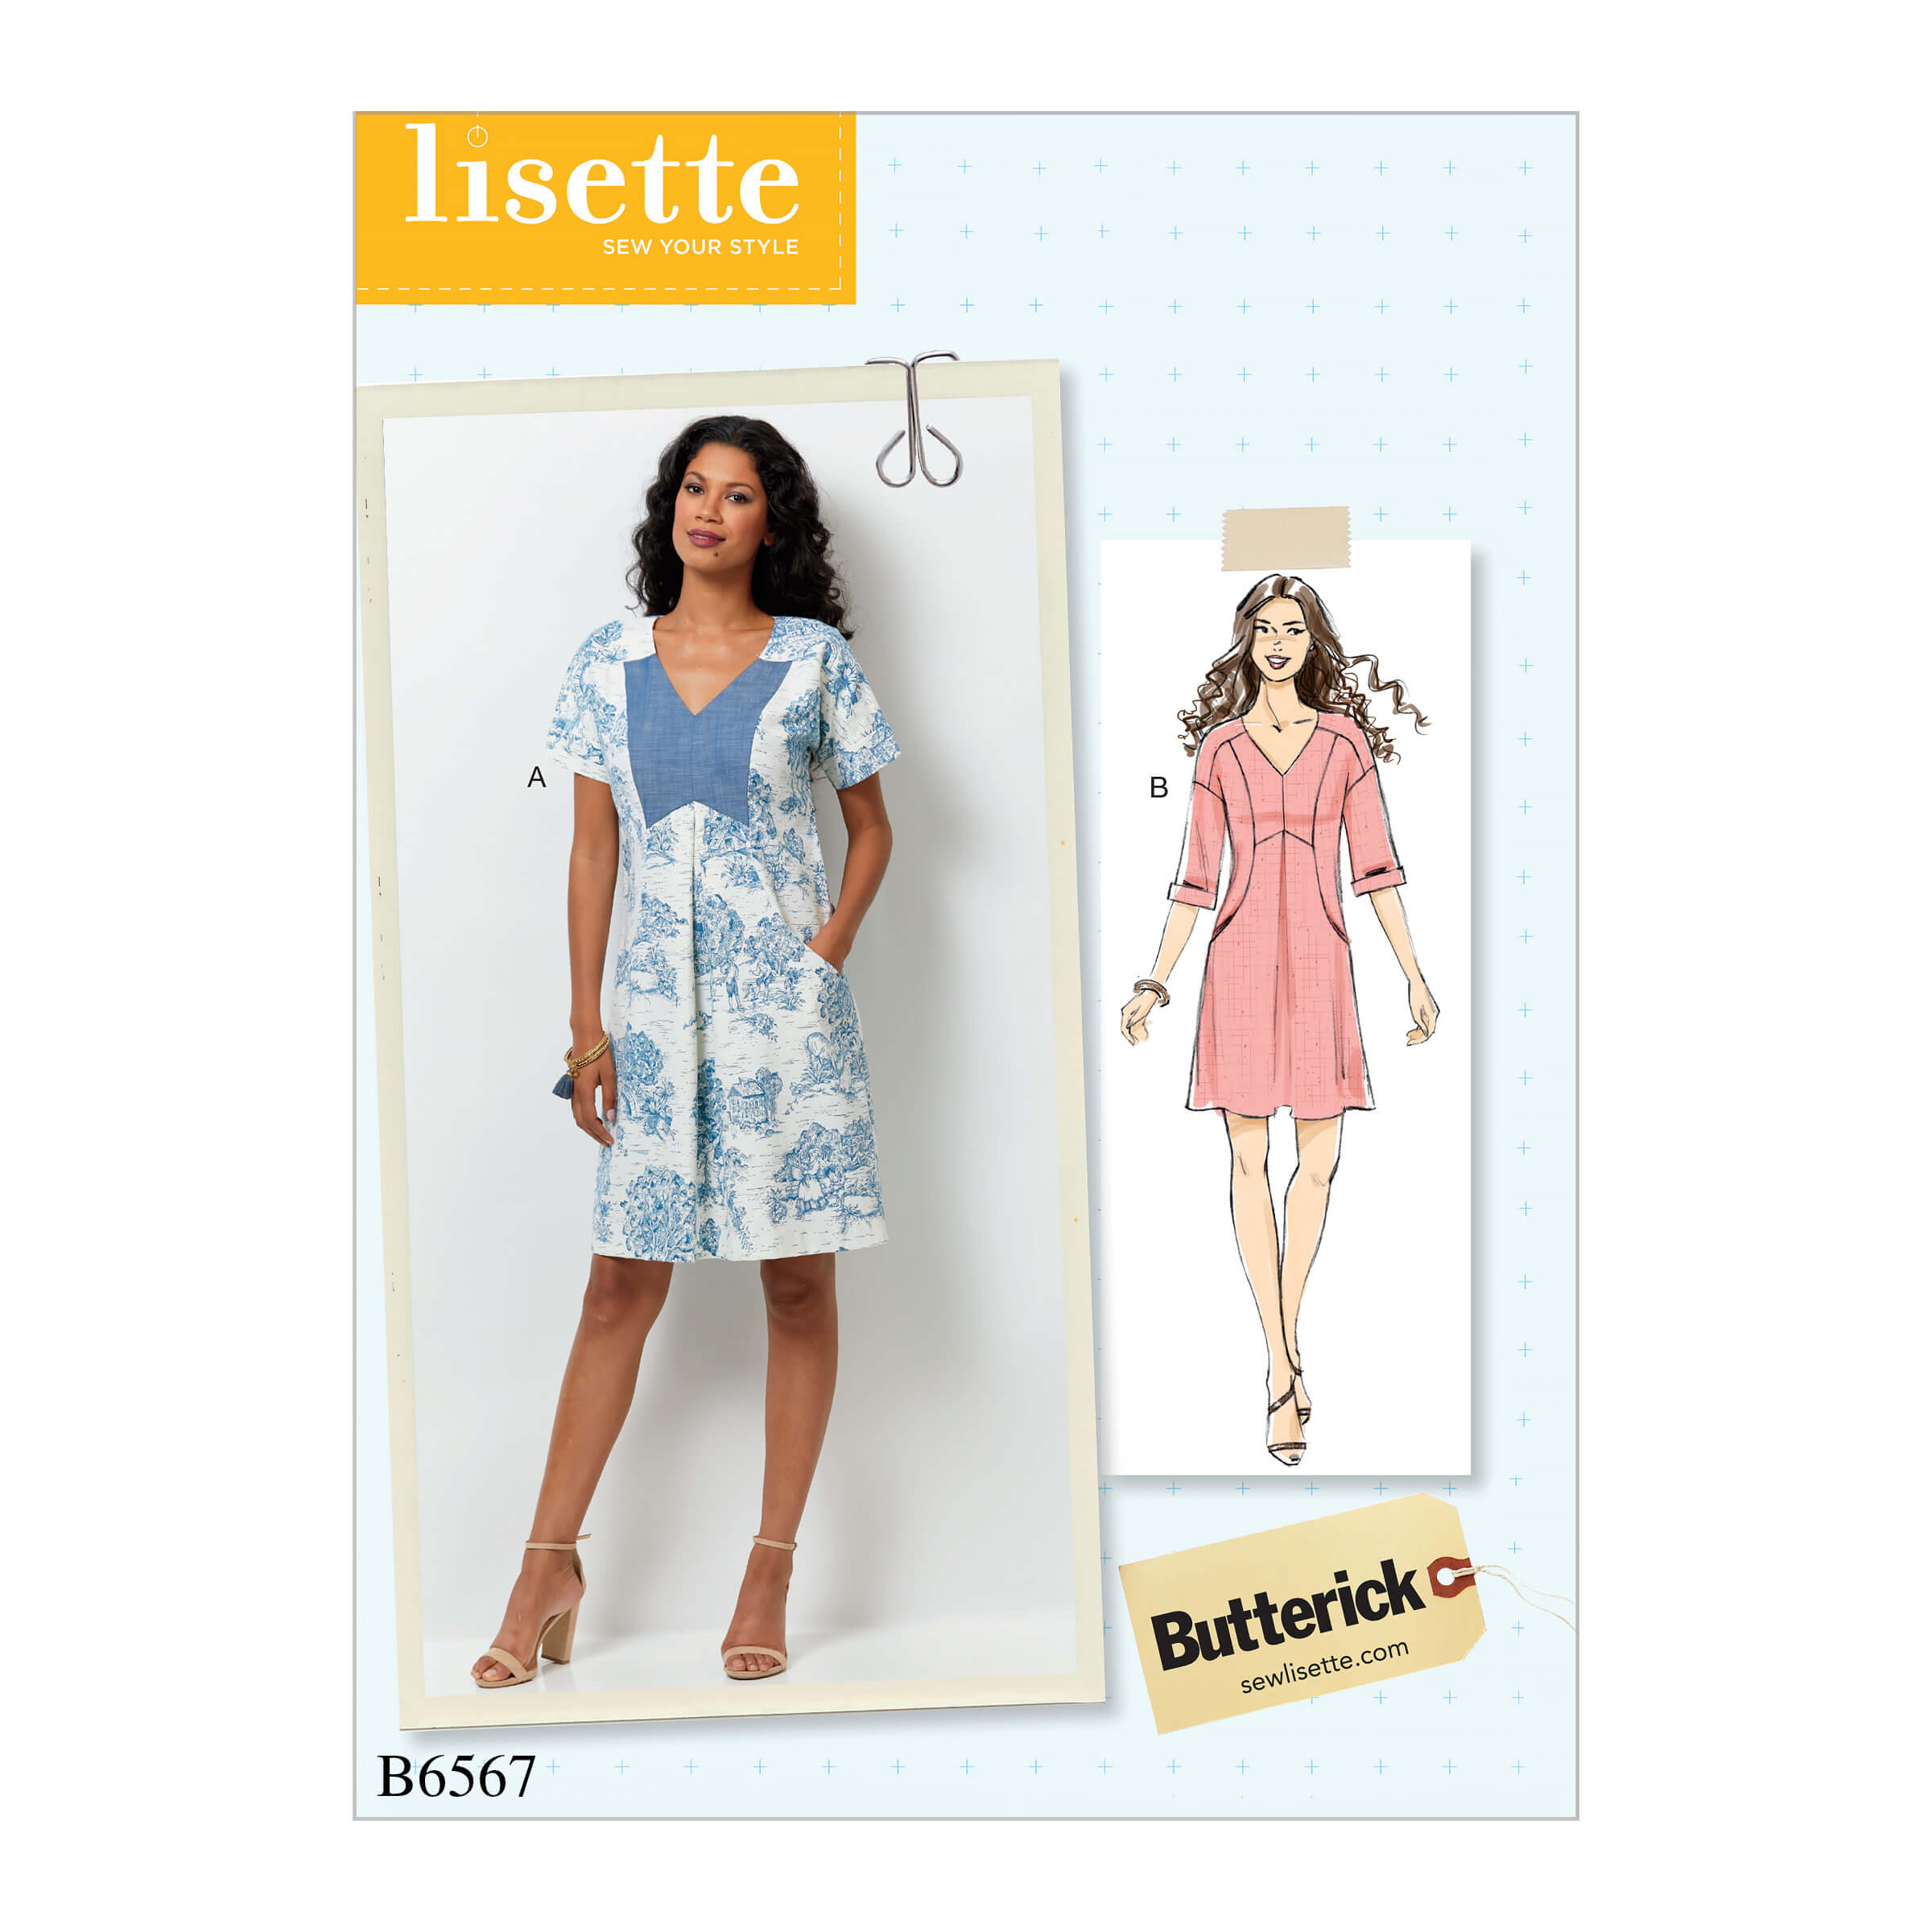 Butterick Sewing Pattern B6567 Lisette Misses' Dress